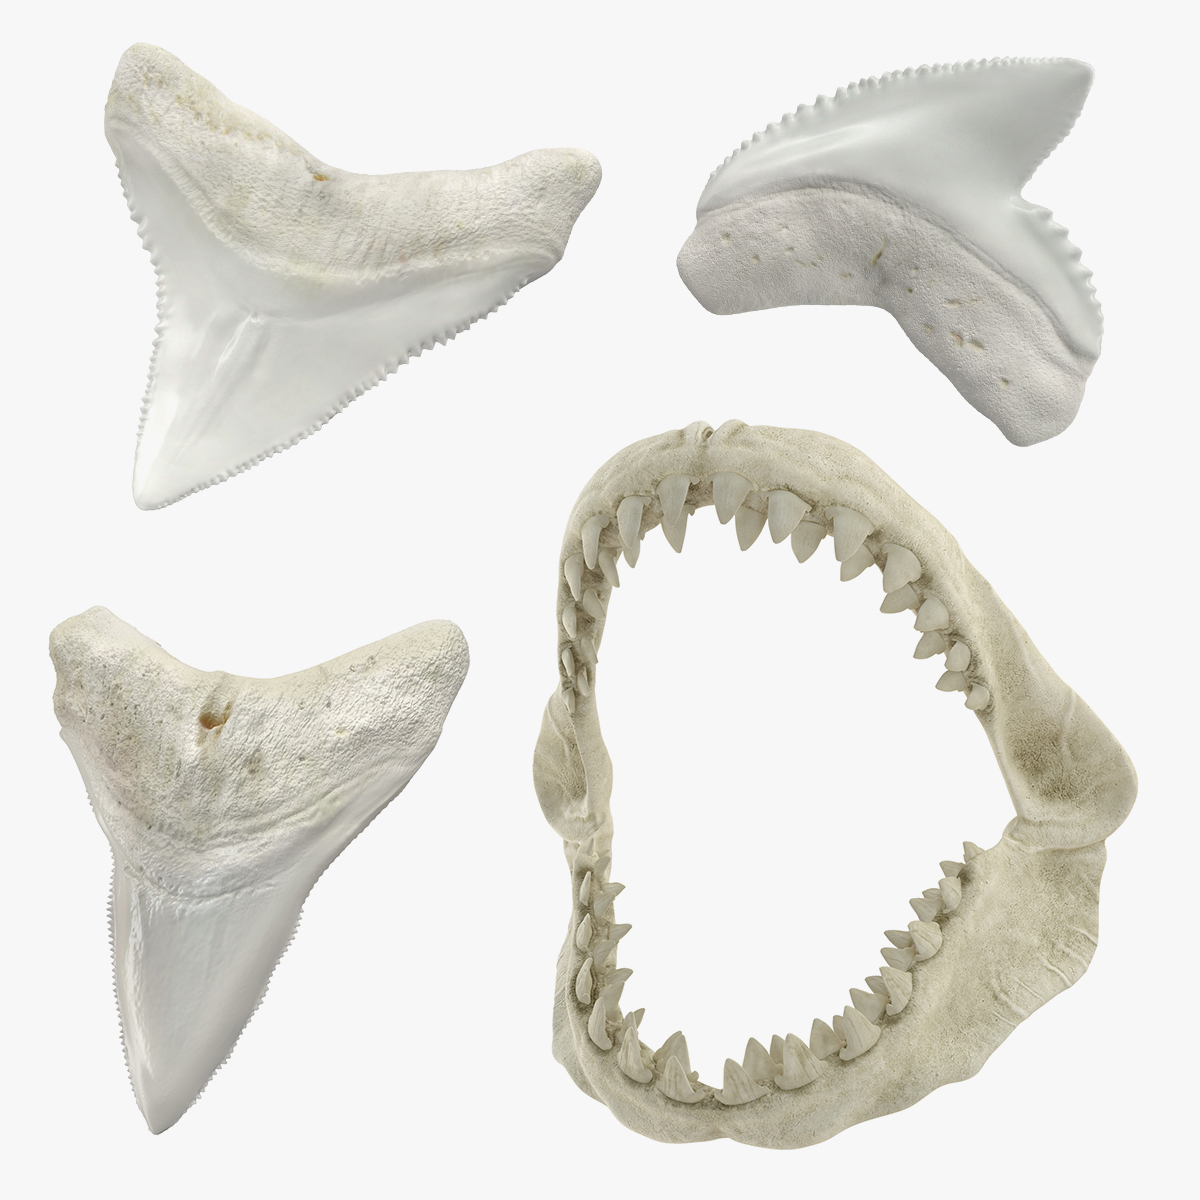 Image result for shark teeth